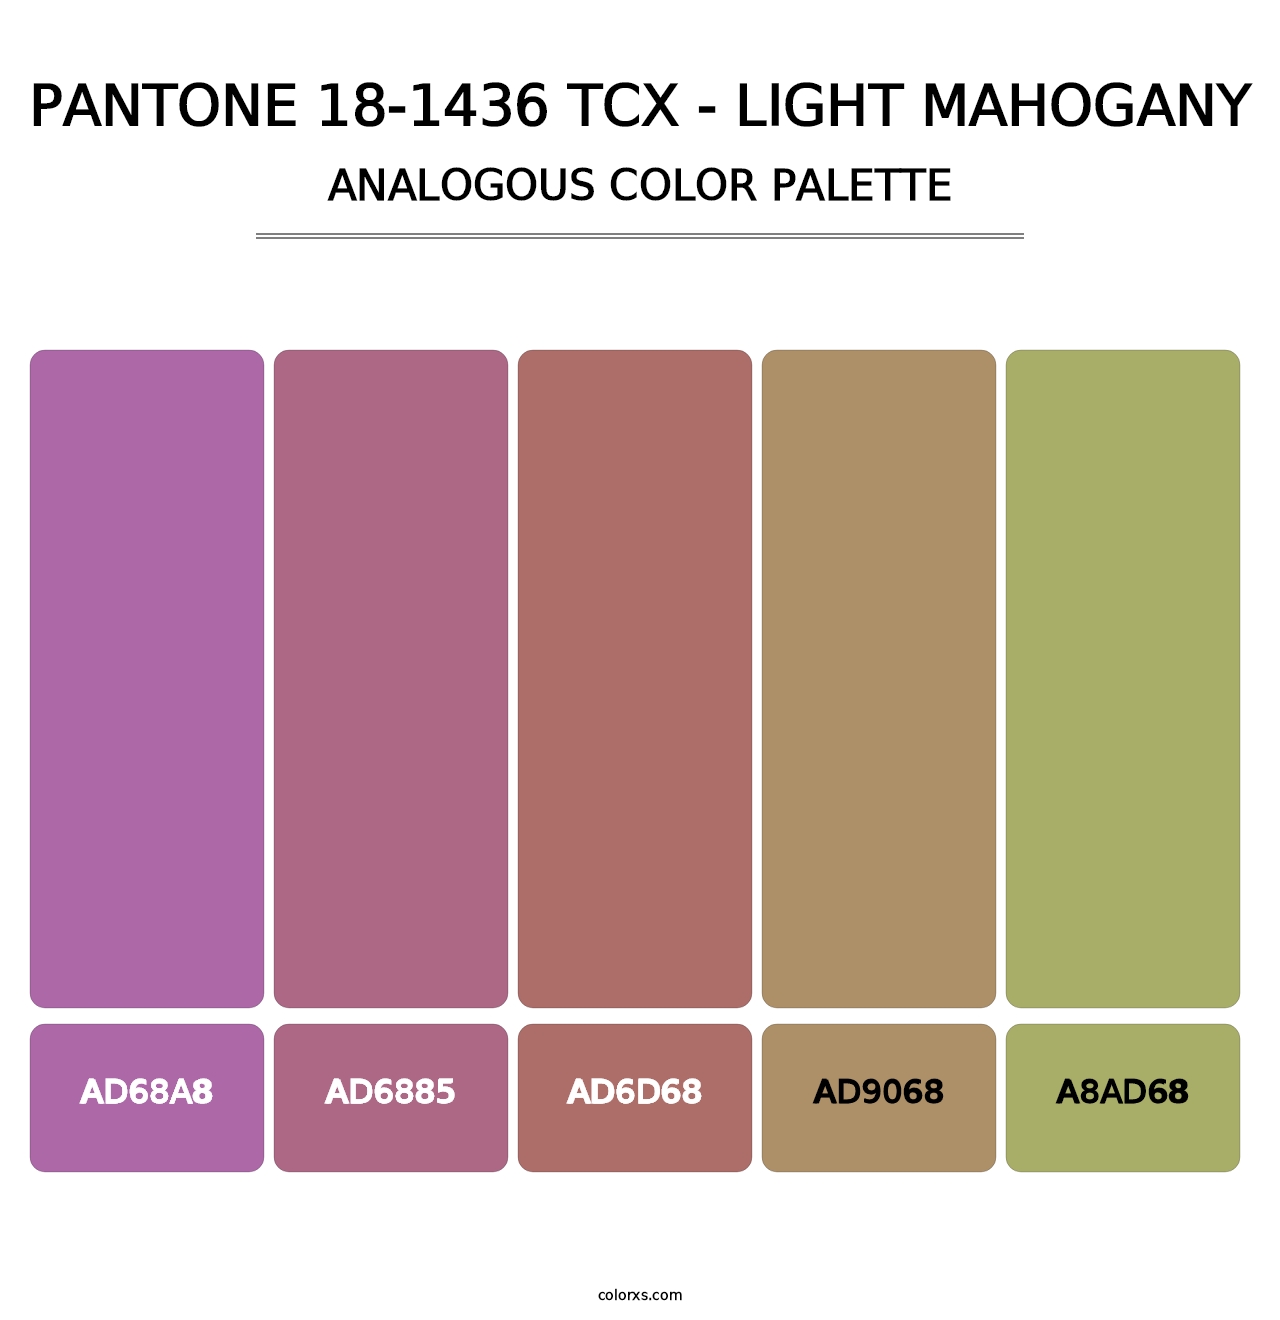 PANTONE 18-1436 TCX - Light Mahogany - Analogous Color Palette